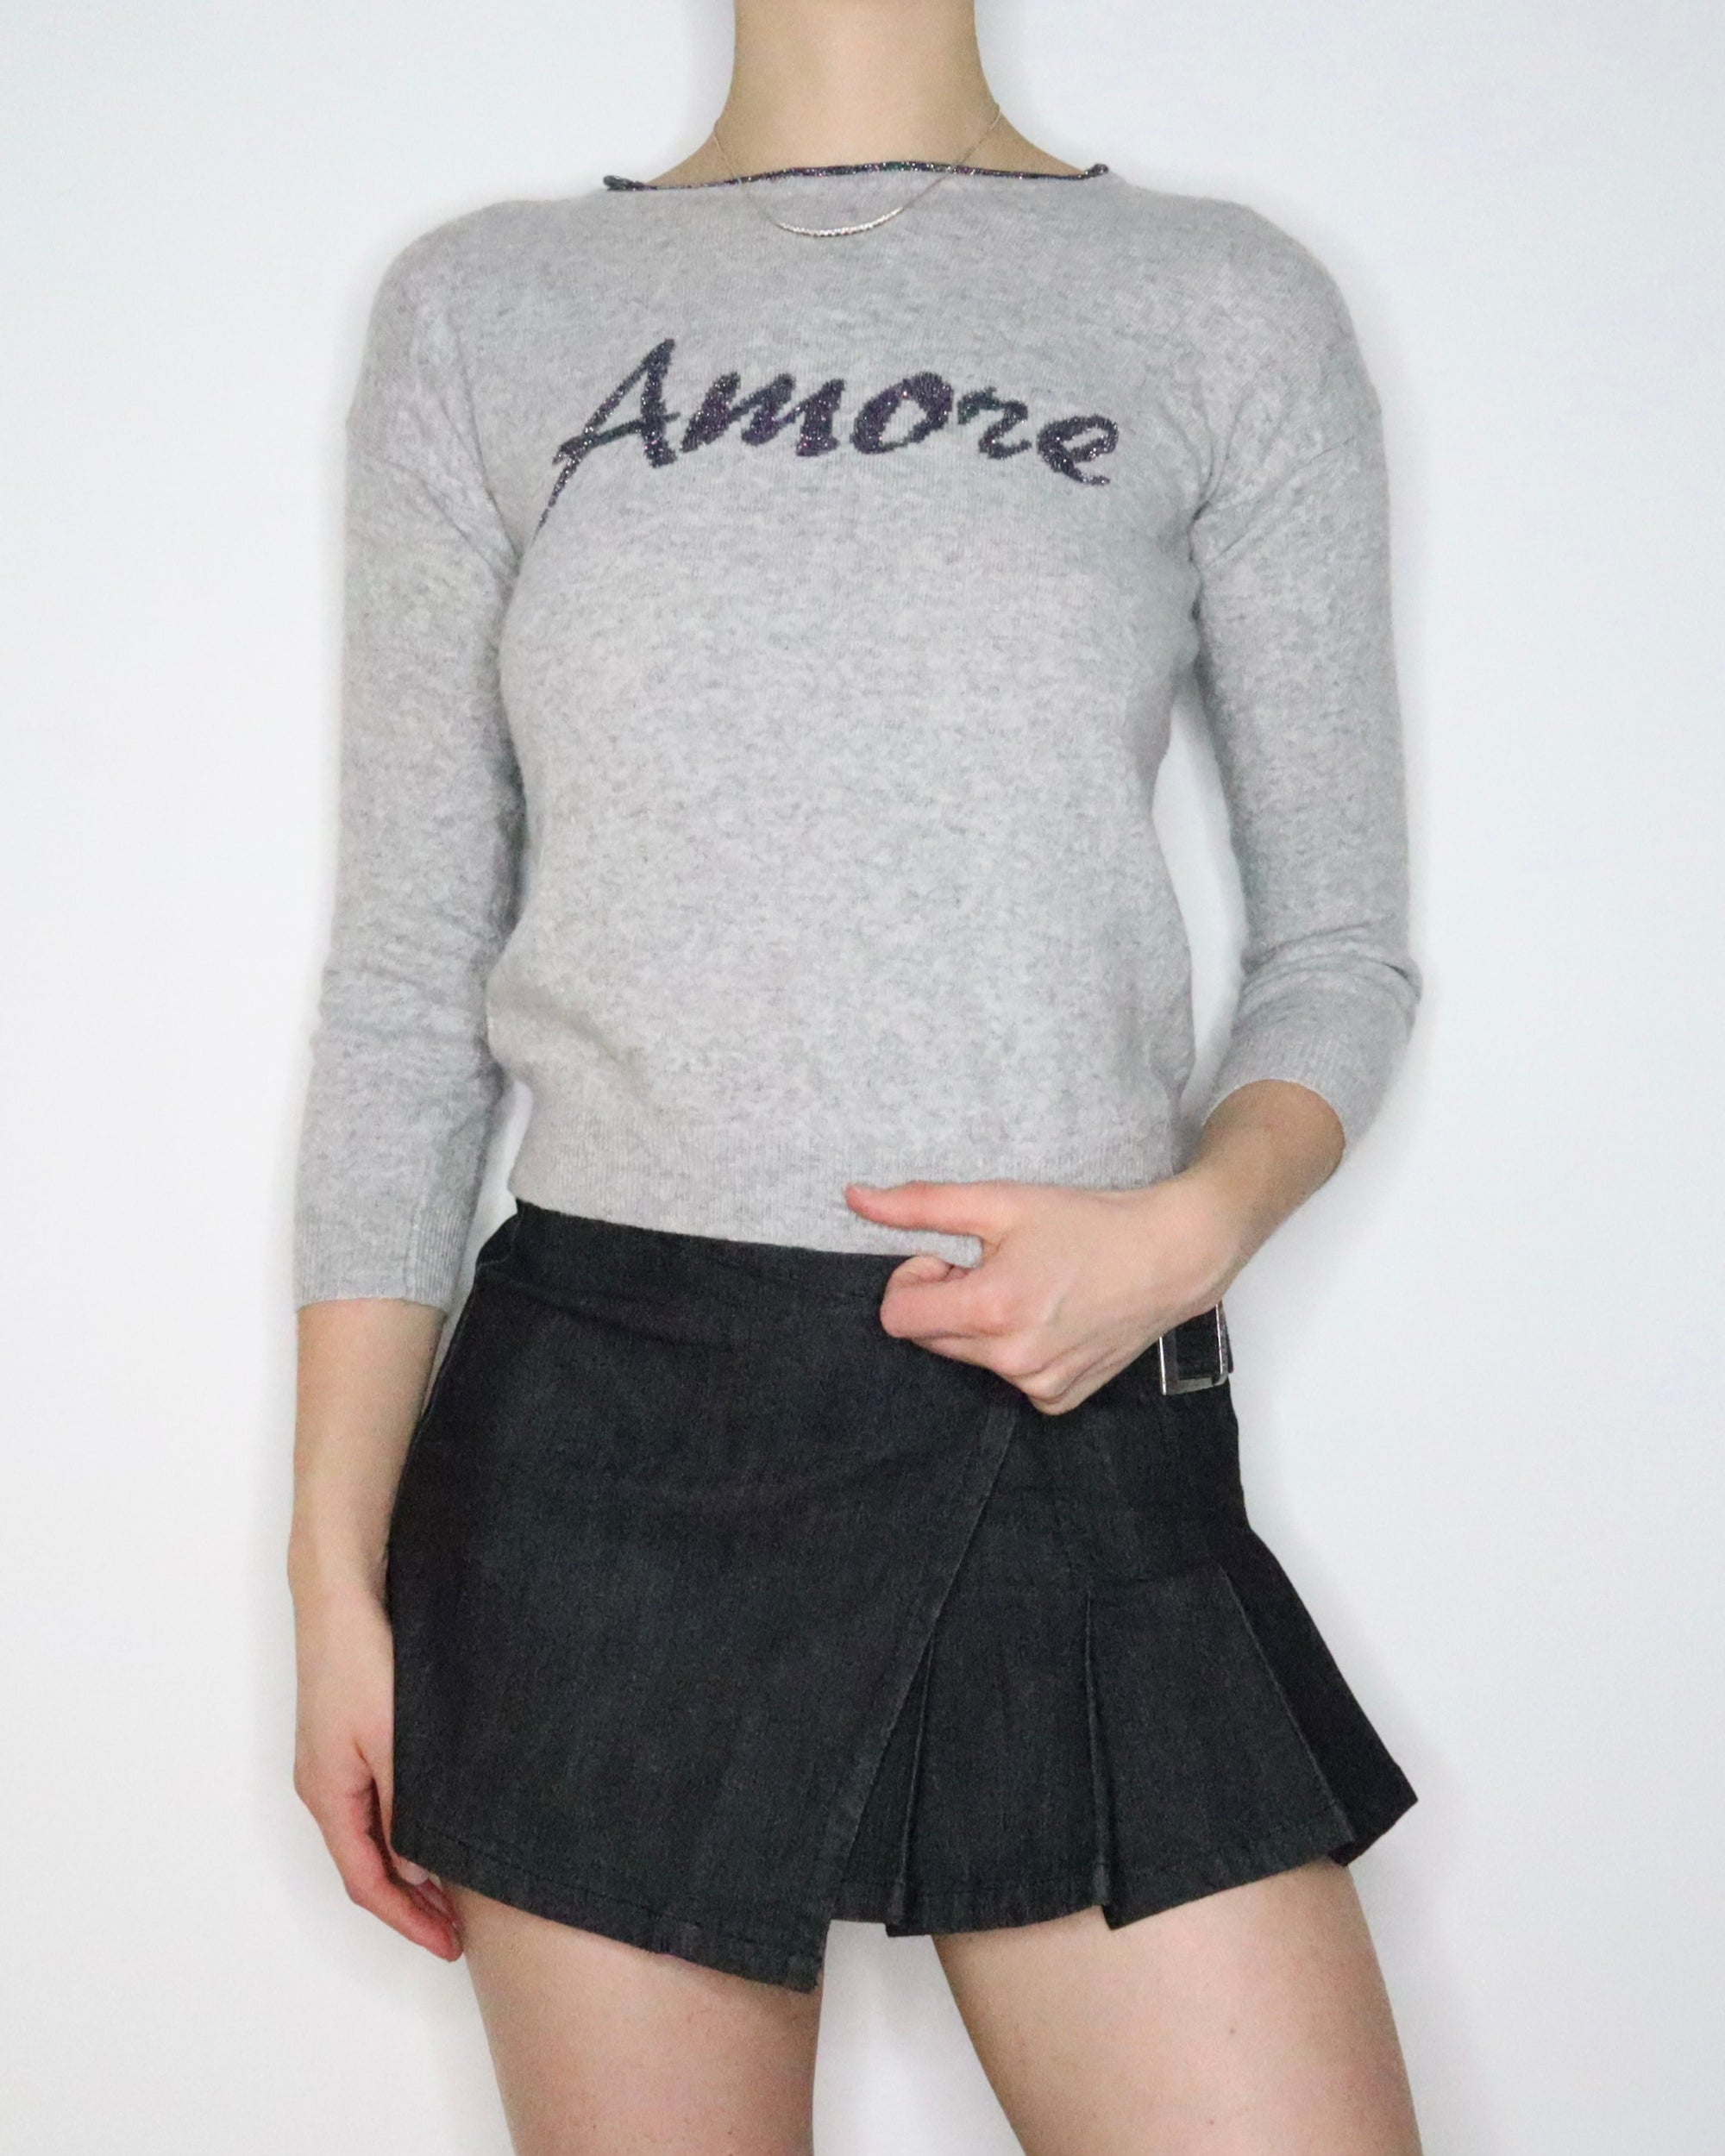 Italian Amore Sweater (Small) 